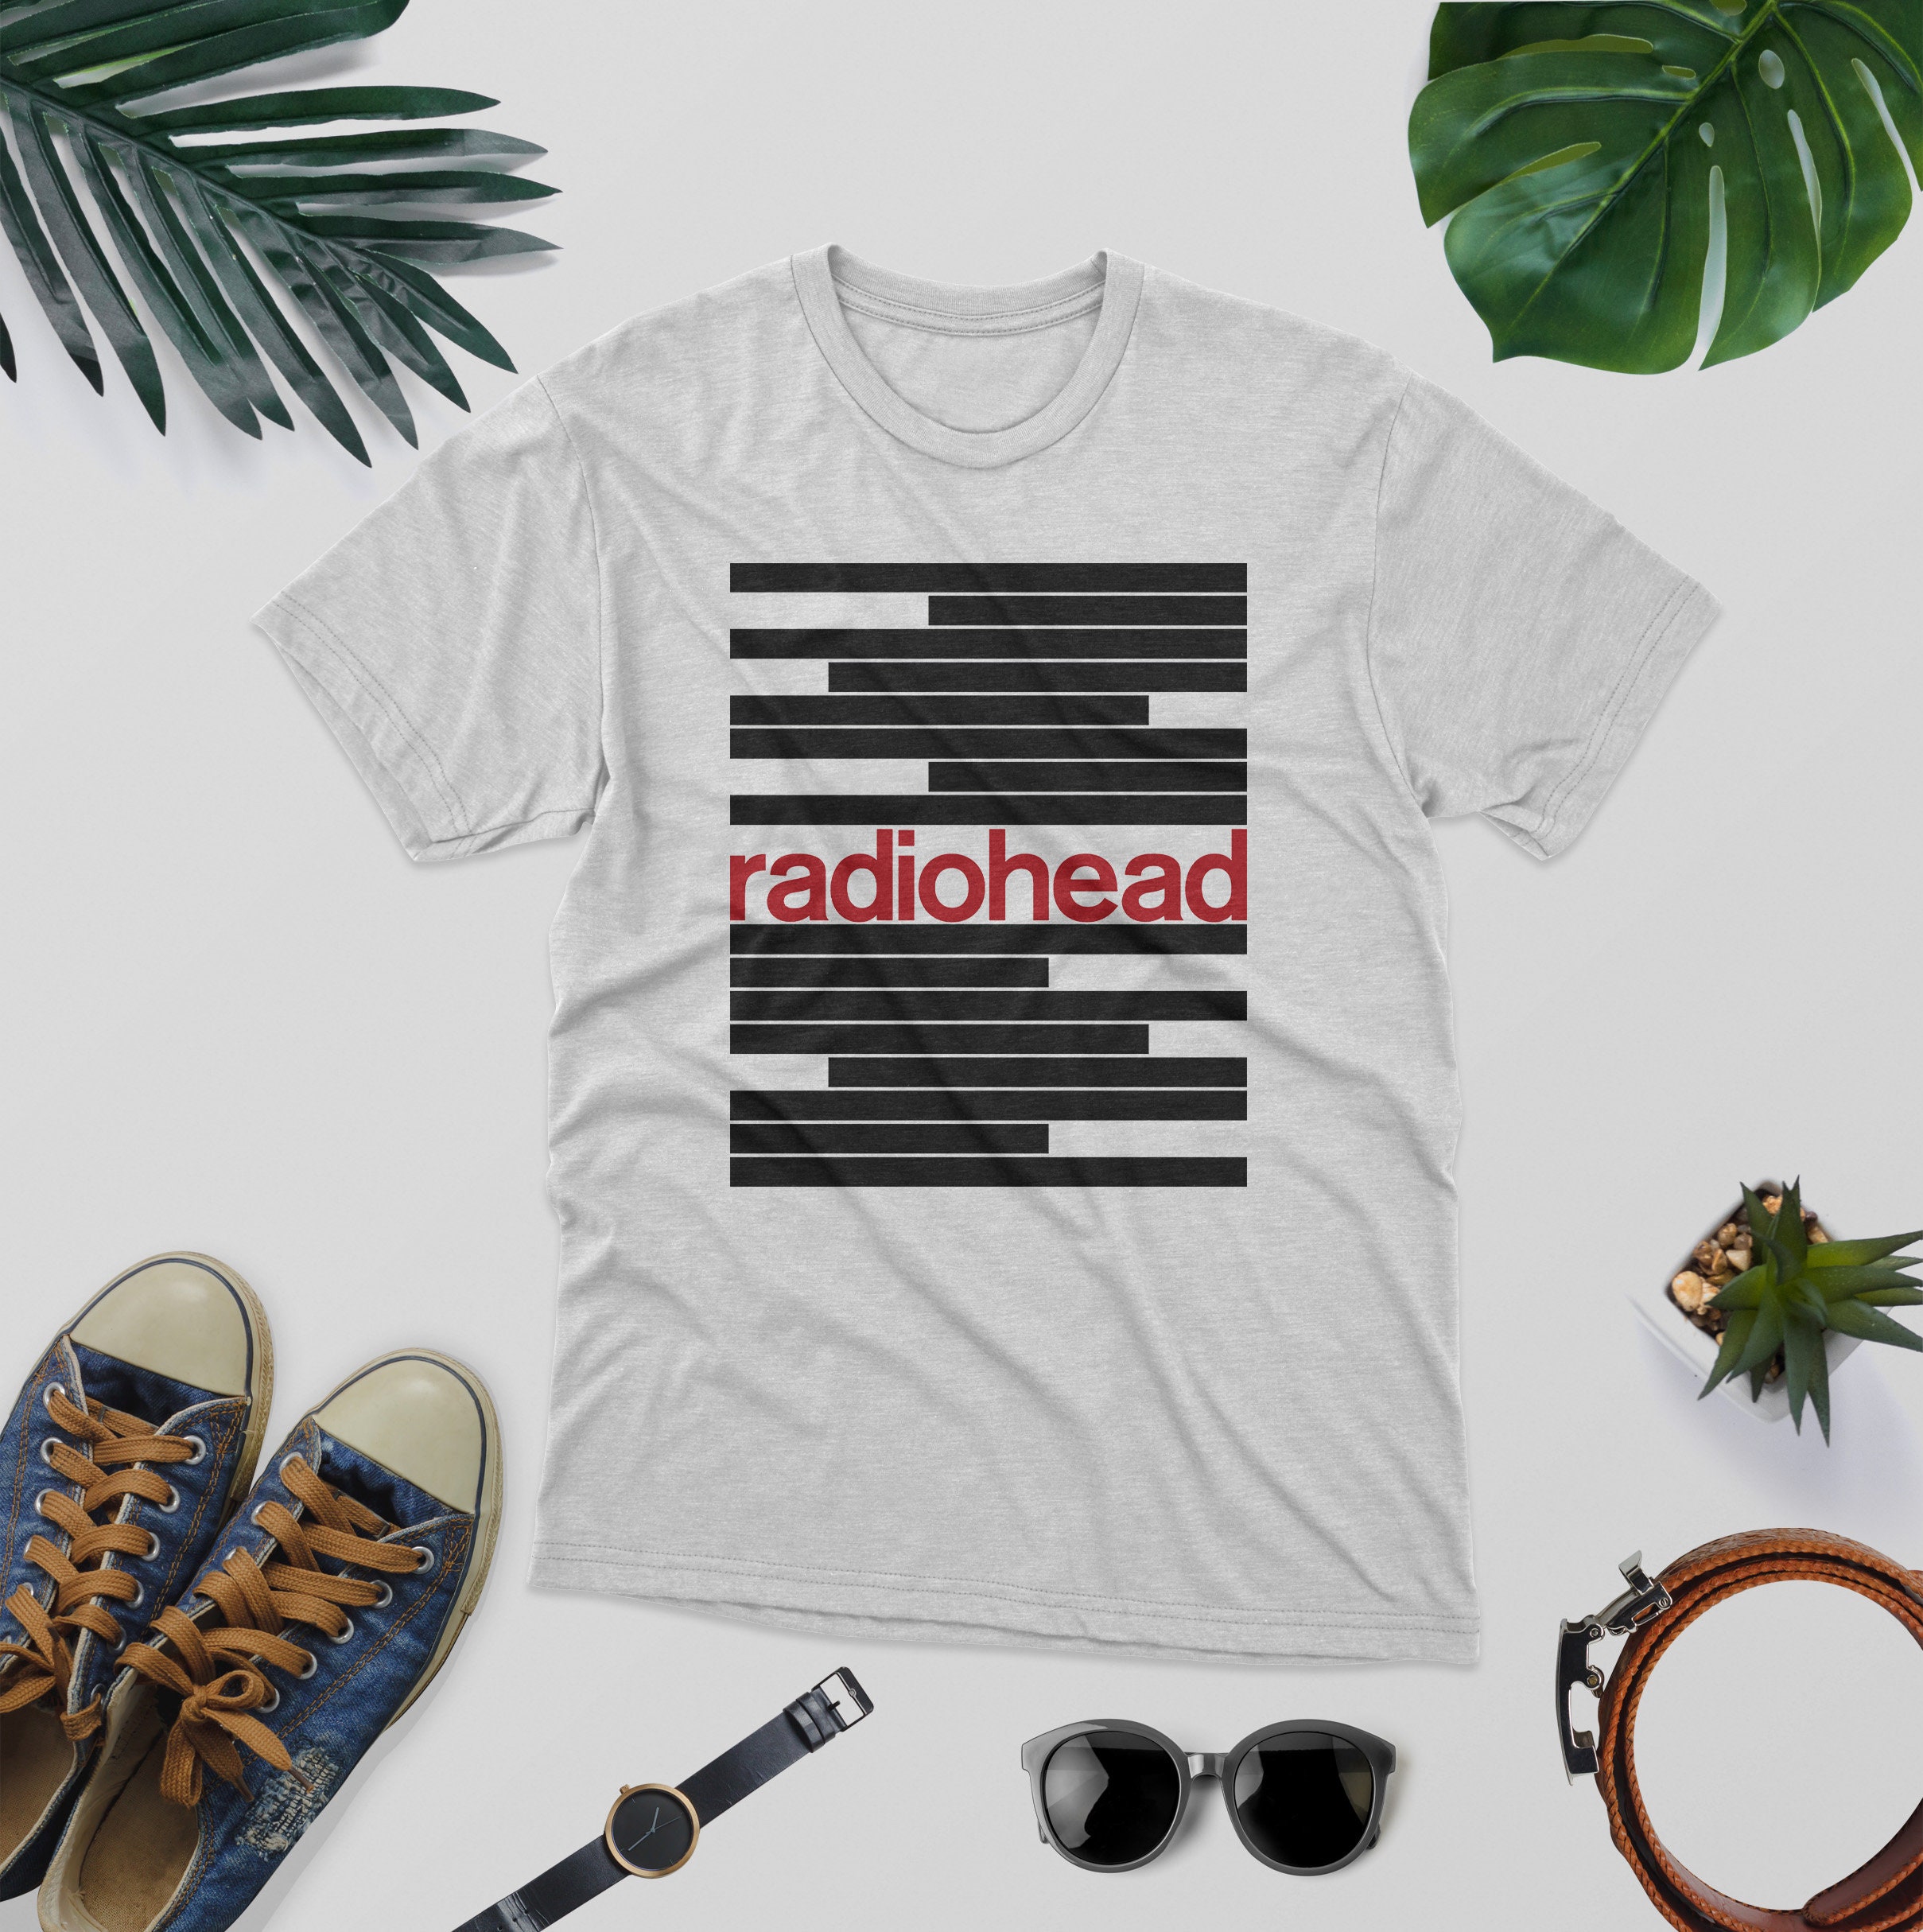 Radiohead T-Shirt. Radiohead Band shirt